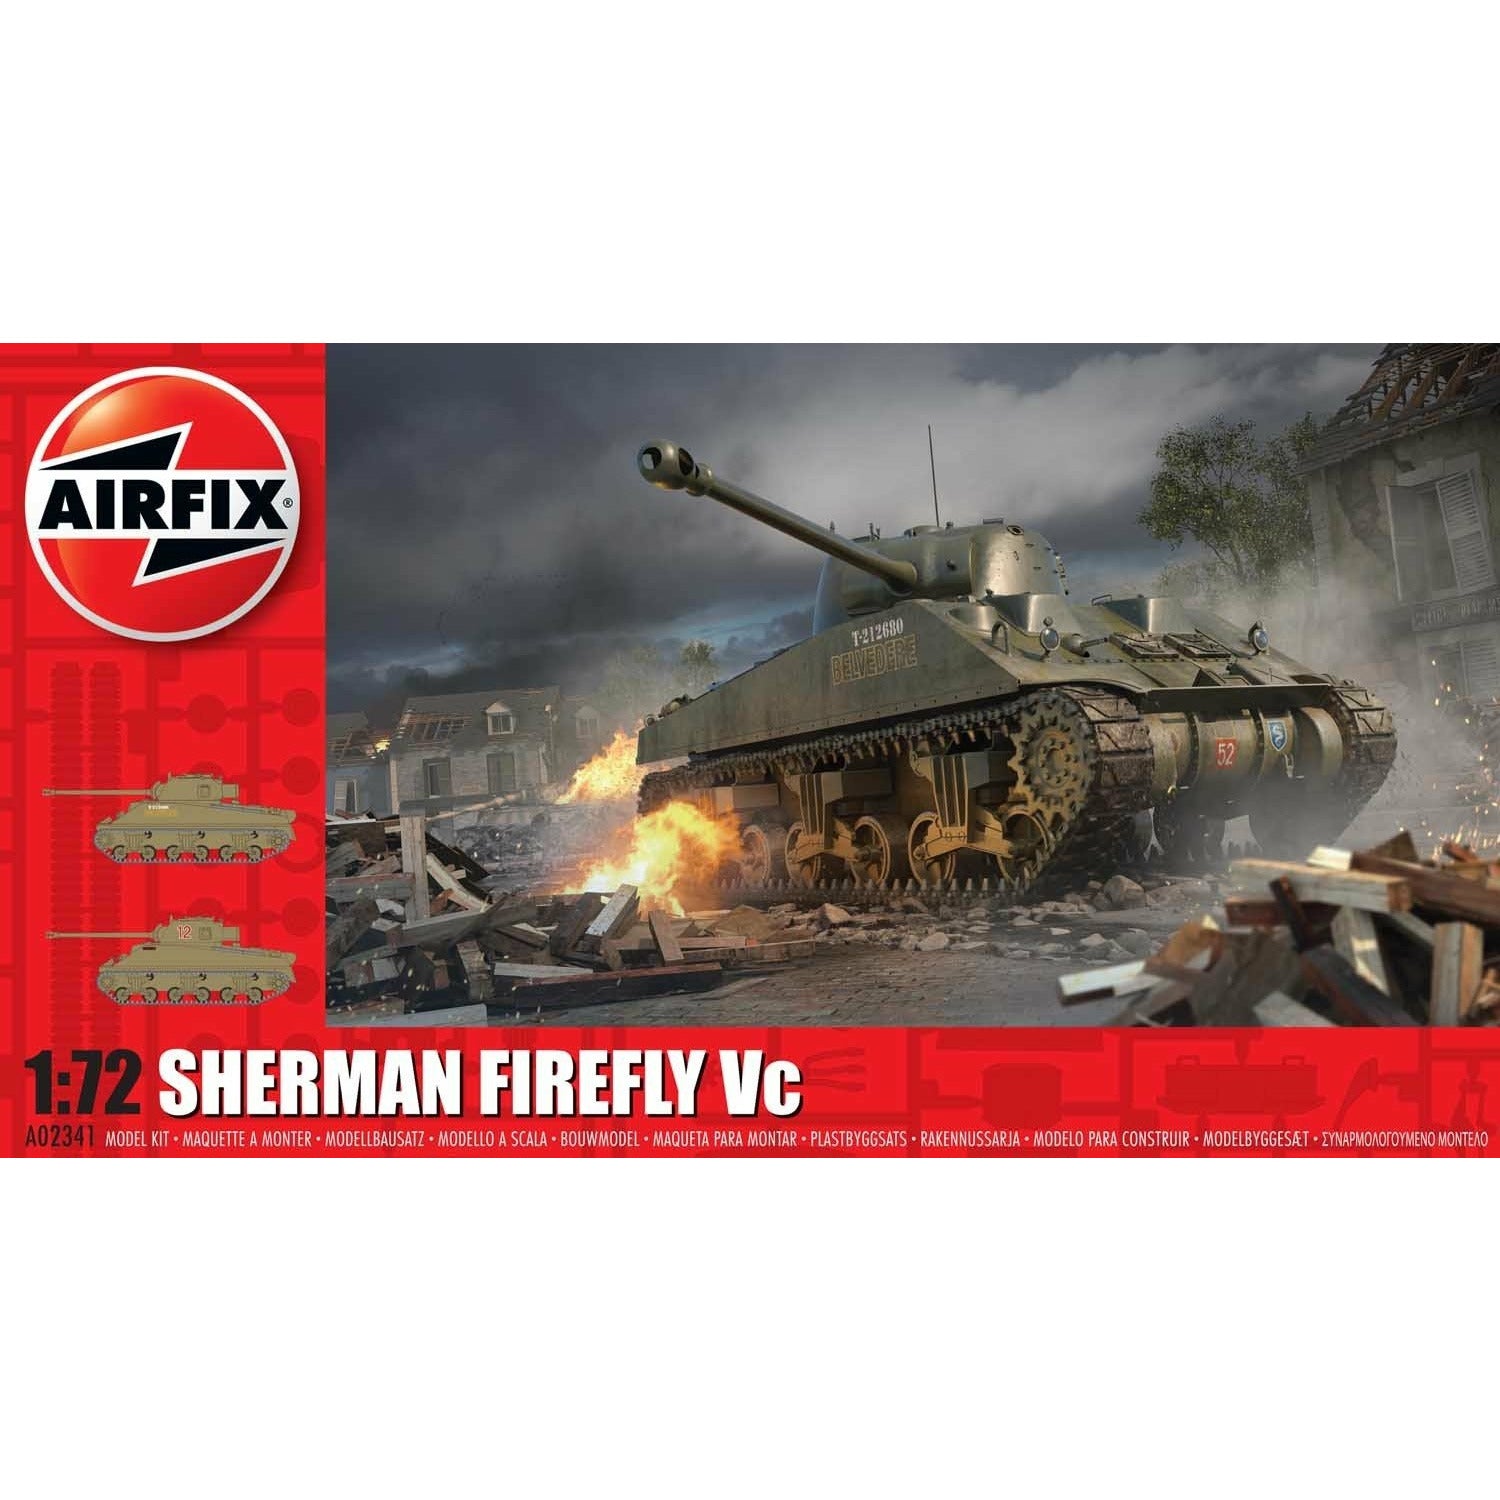 Sherman Firefly Vc 1/72 #A02341 by Airfix